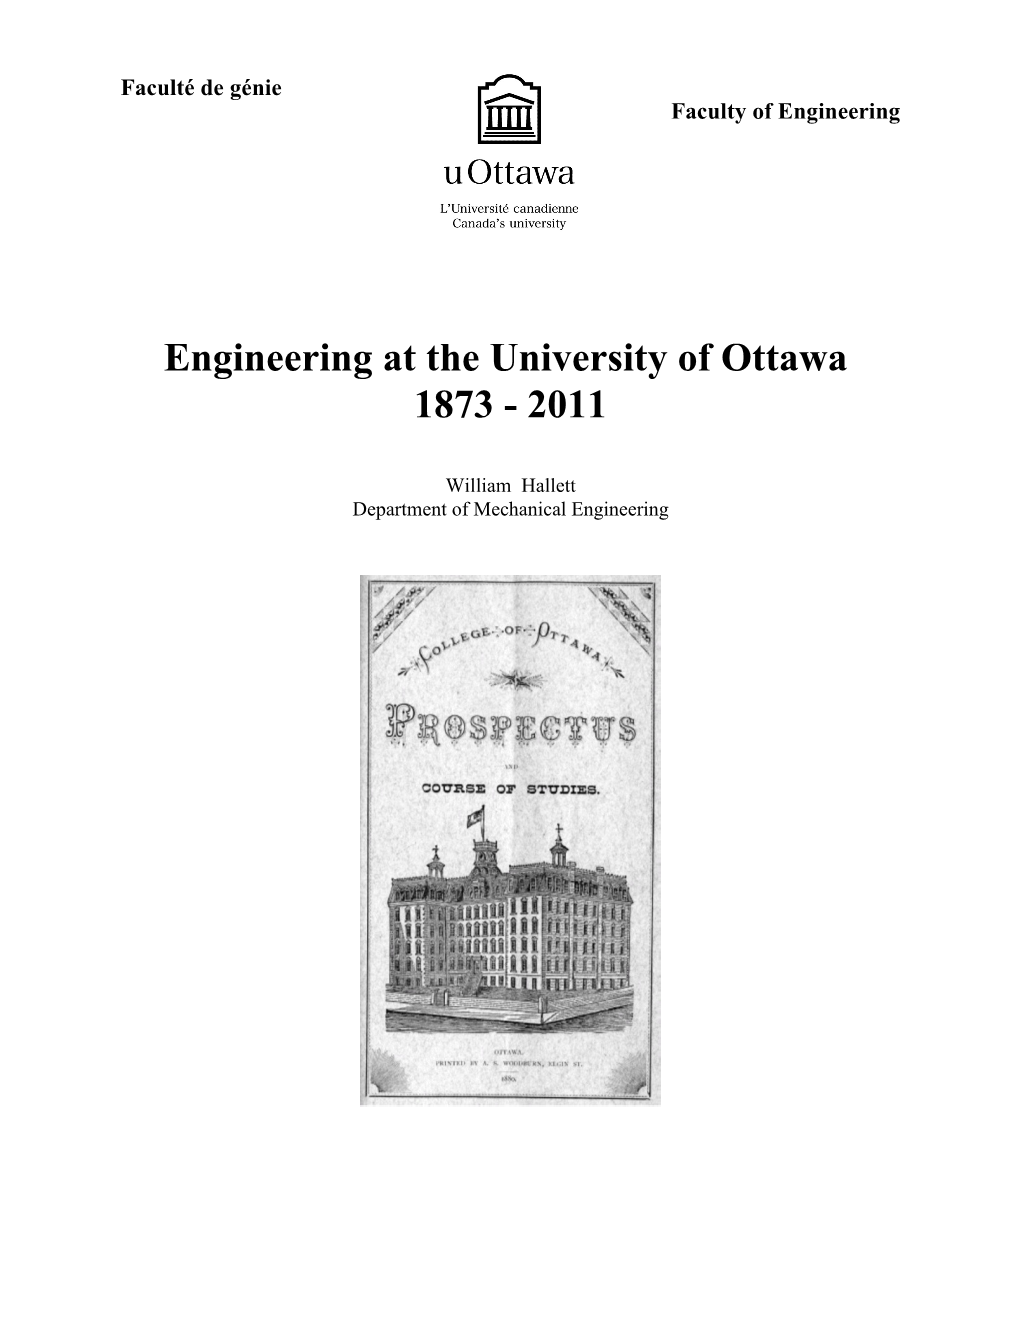 Engineering at the University of Ottawa 1873 - 2011